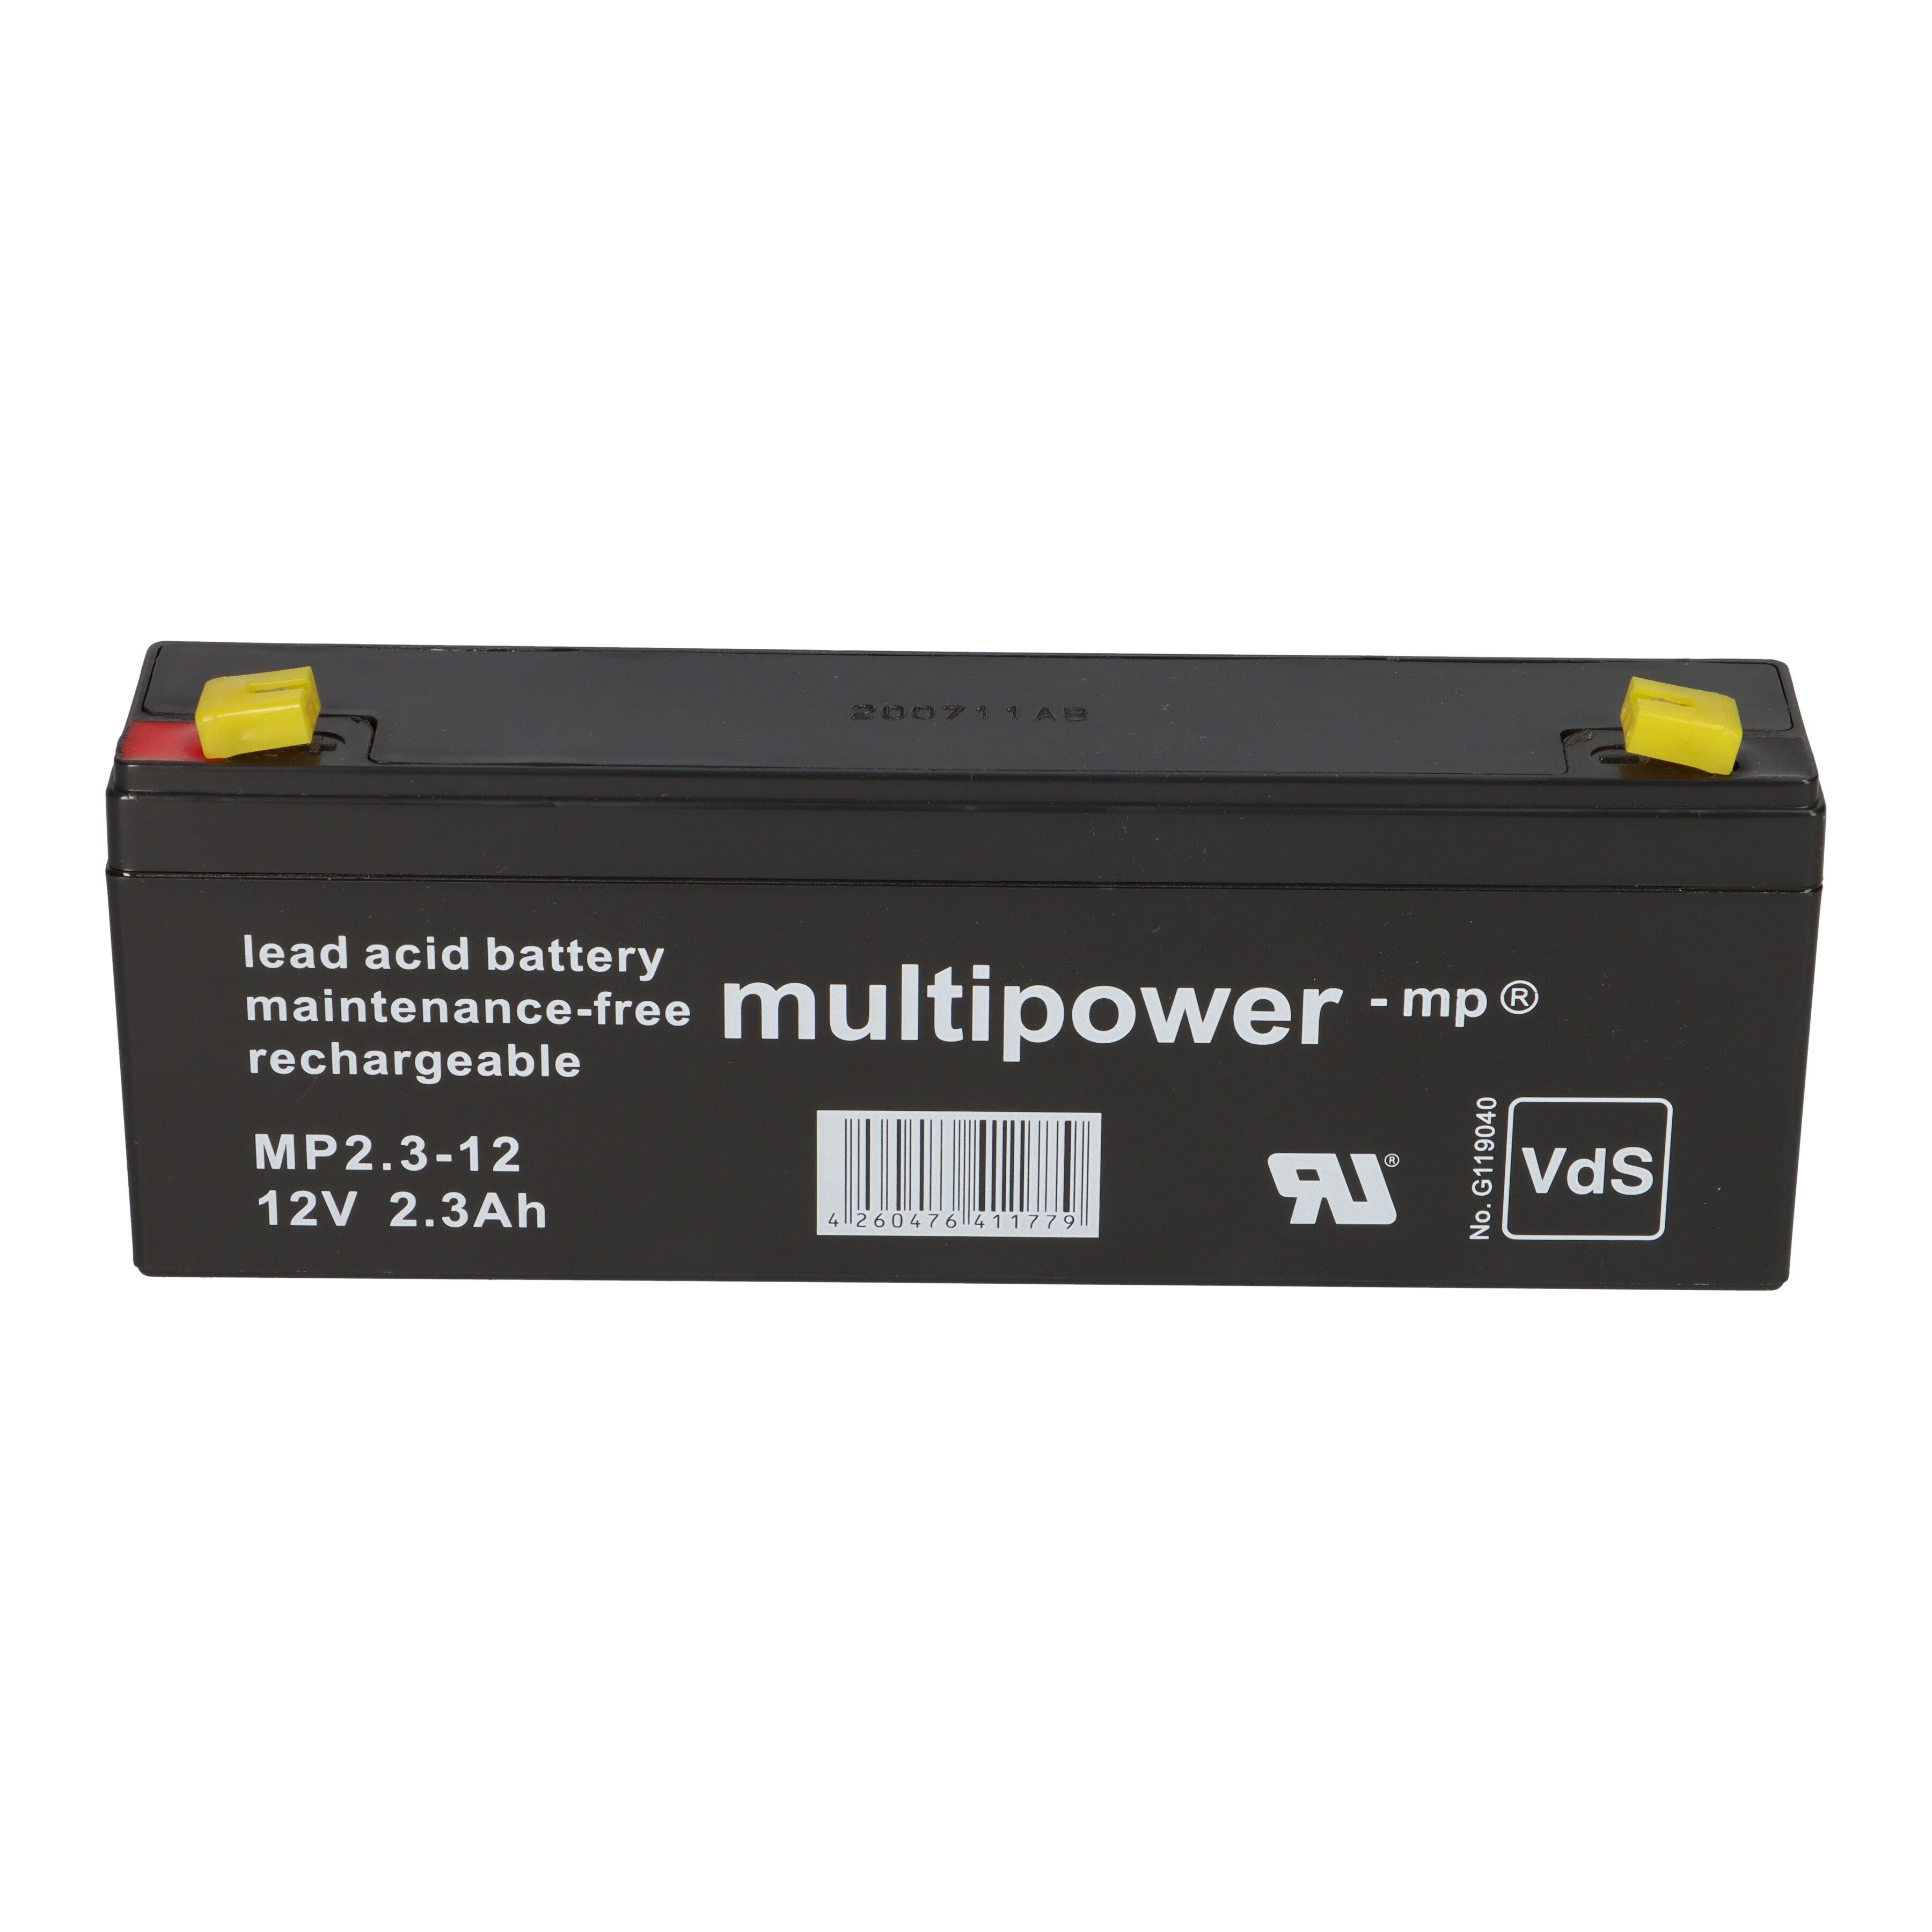 Multipower 1x Multipower 4,8 MP2,3-12 2,3Ah Pb 12V Blei-Akku Faston G107033, Bleiakkus VdS